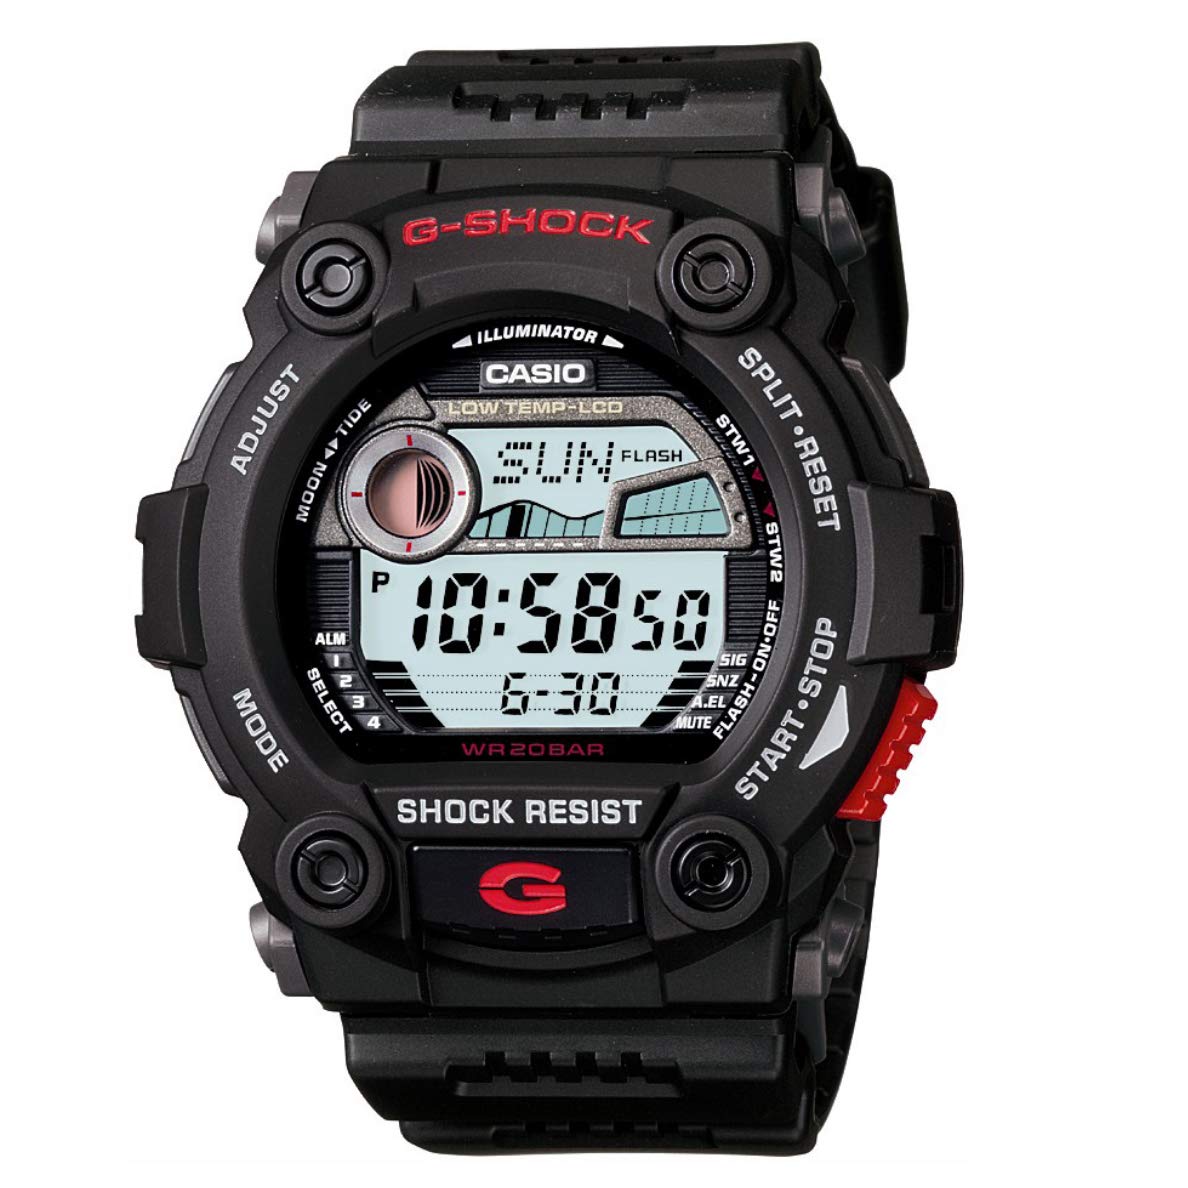 G7900 200M Water Resistant G-Shock Rescue Digital Sports Watch - Black